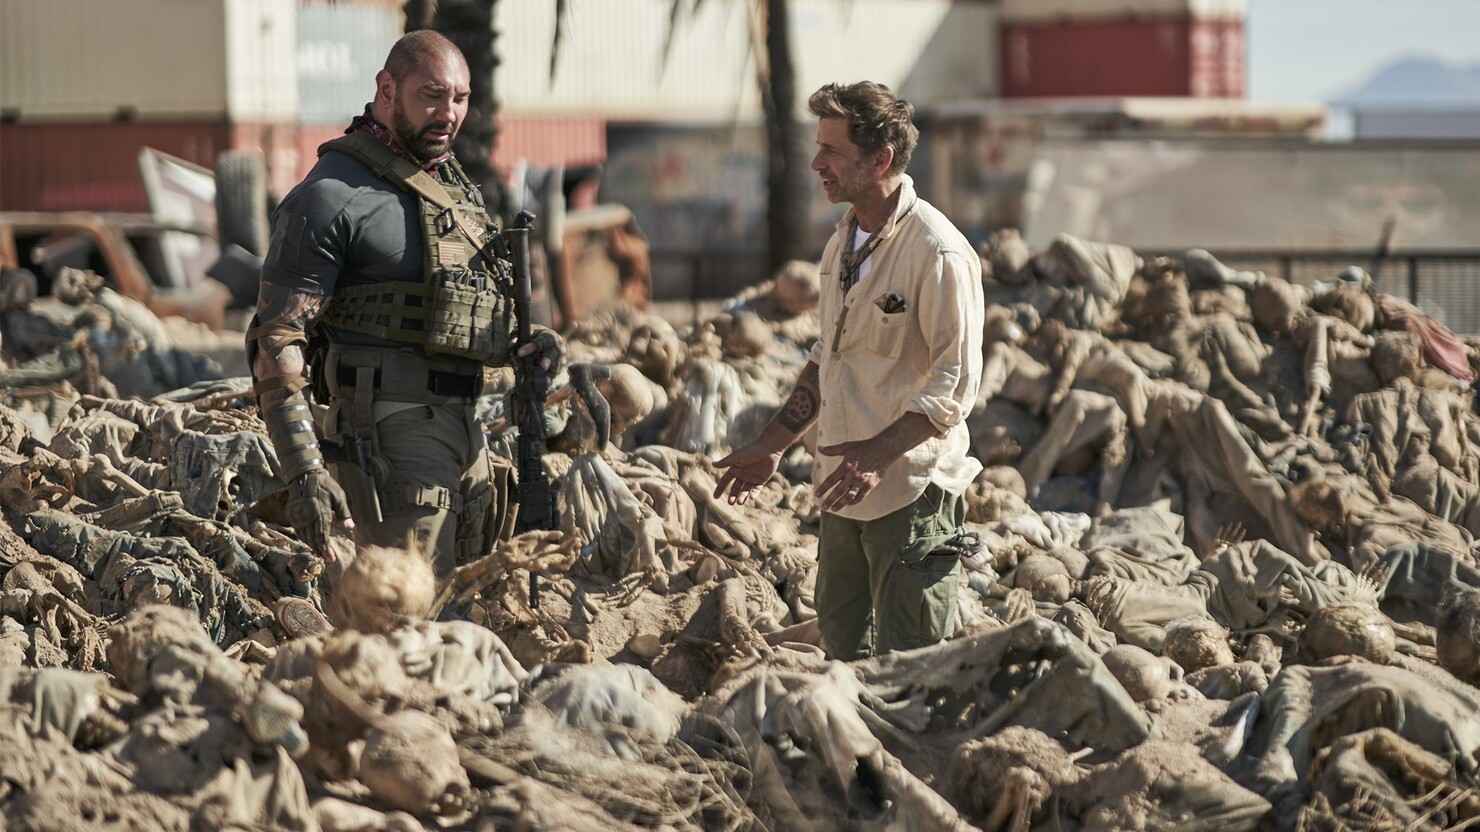 Дэйв Батиста и Зак Снайдер по колено в трупах на кадре со съёмок фильма "Армия мертвецов"